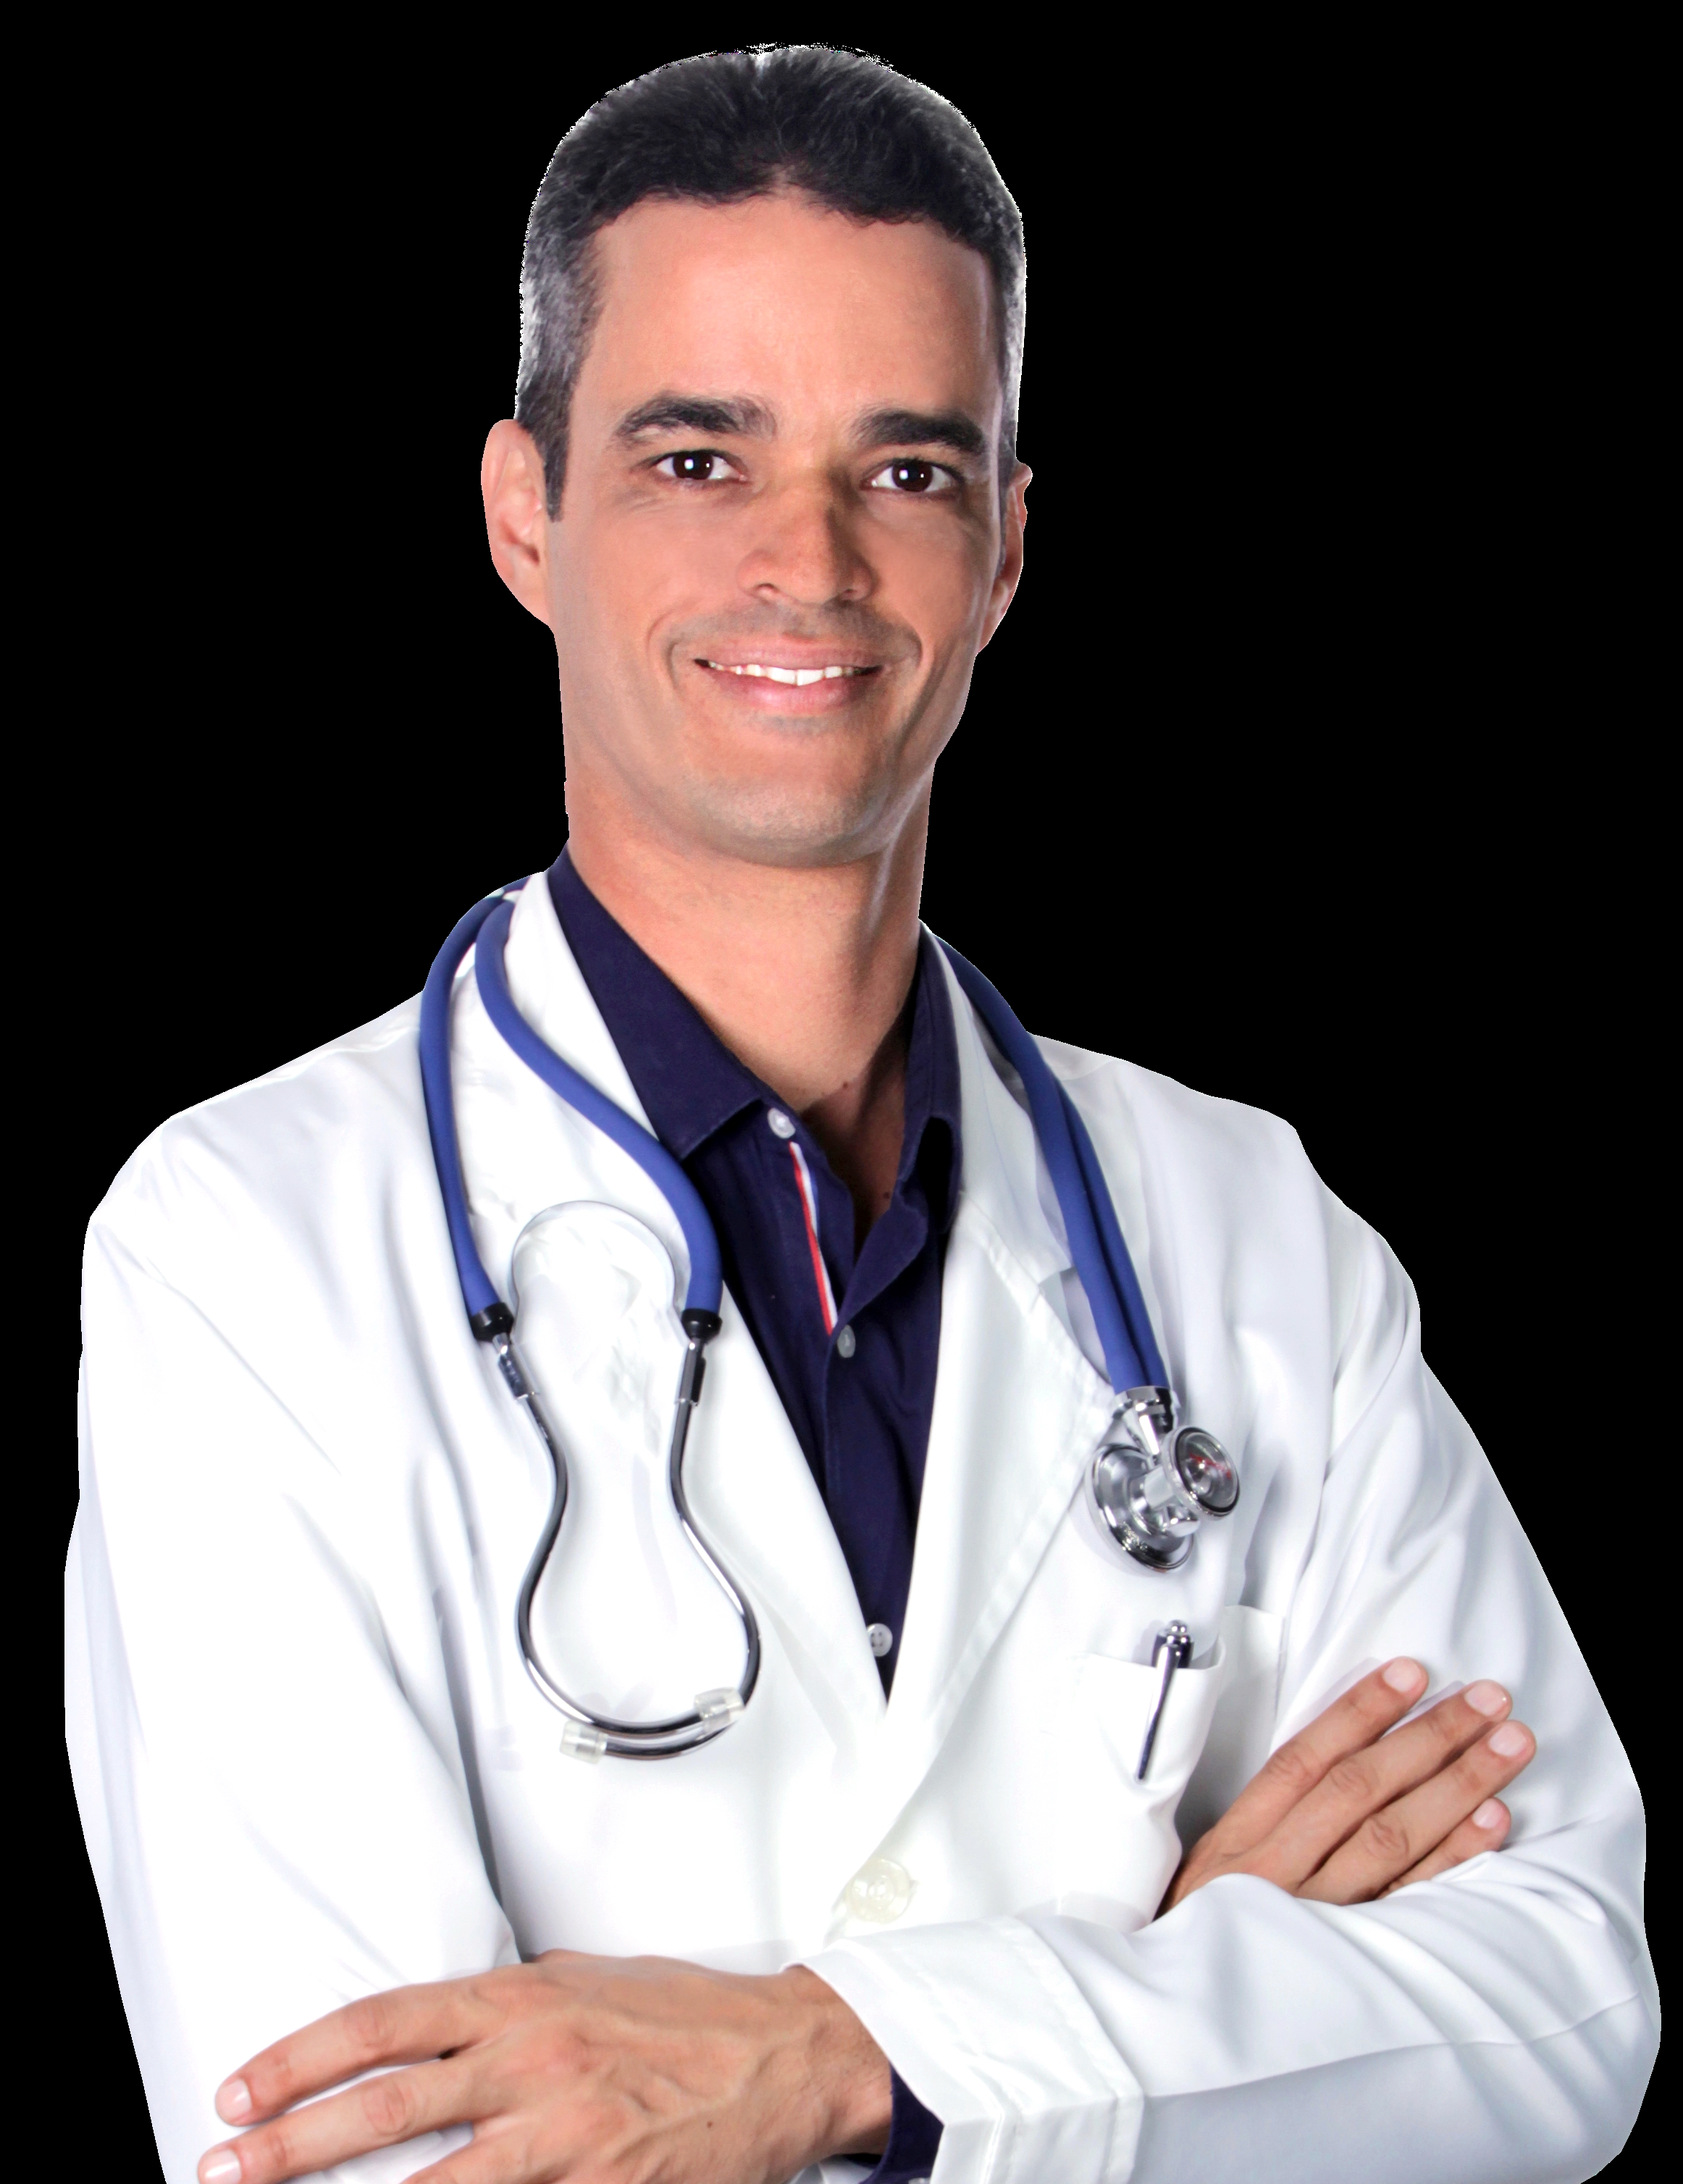 Dr. Rocha